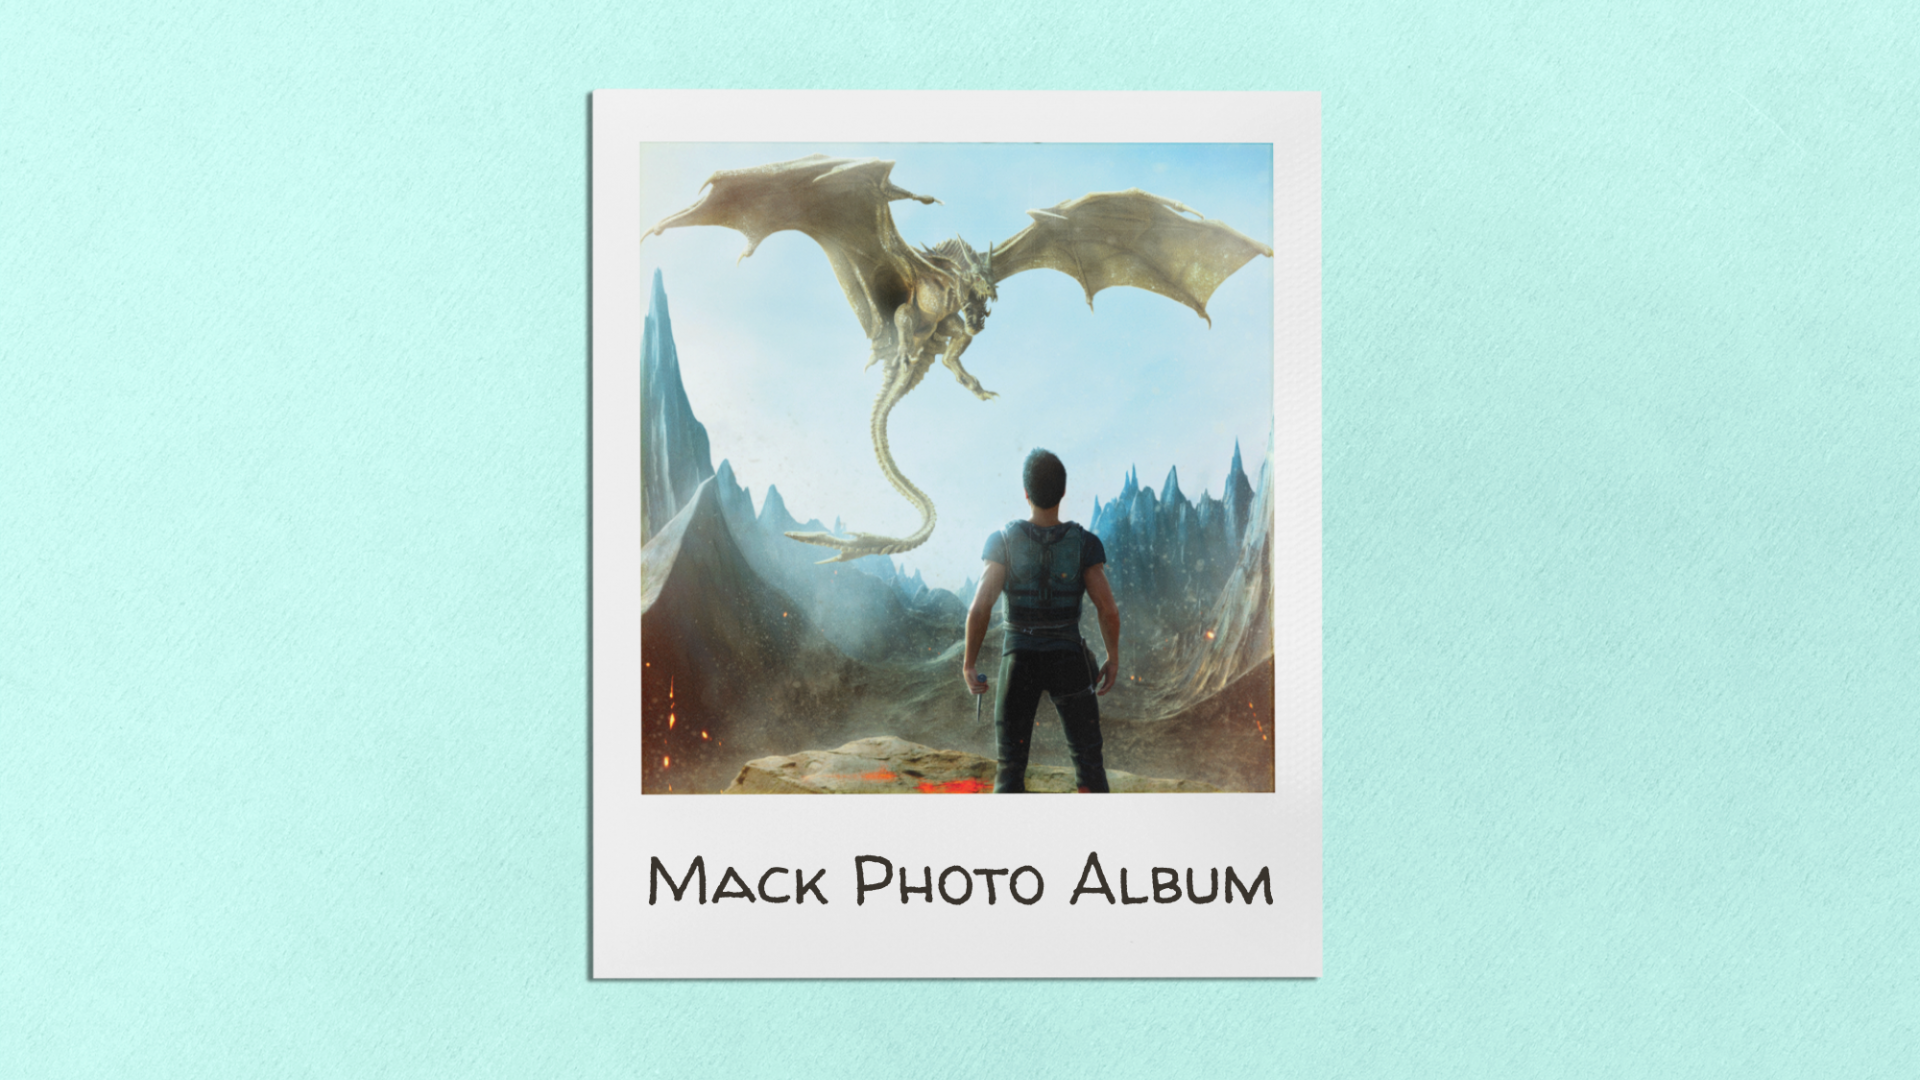 My MACK Photo Album